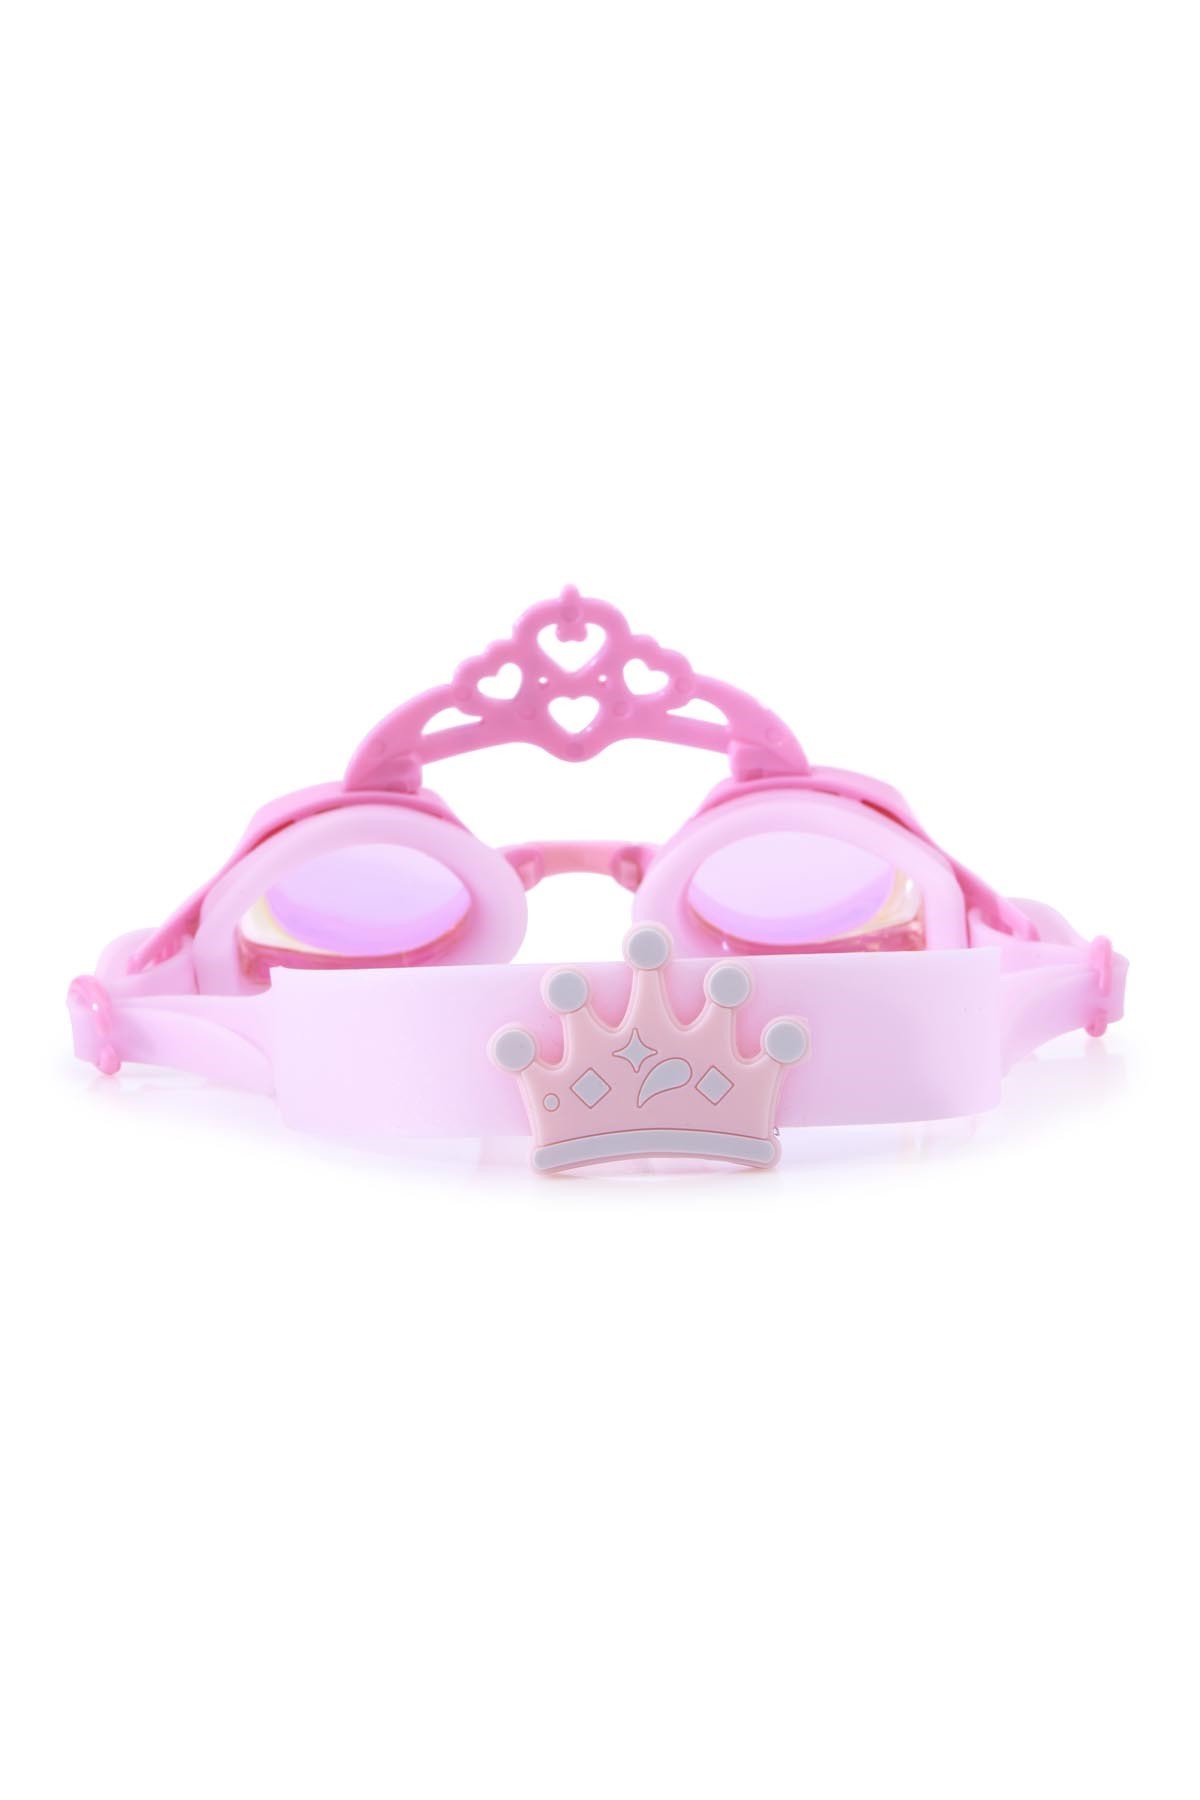 Bling2o Deniz Gözlüğü Princess Crown Peach Pink